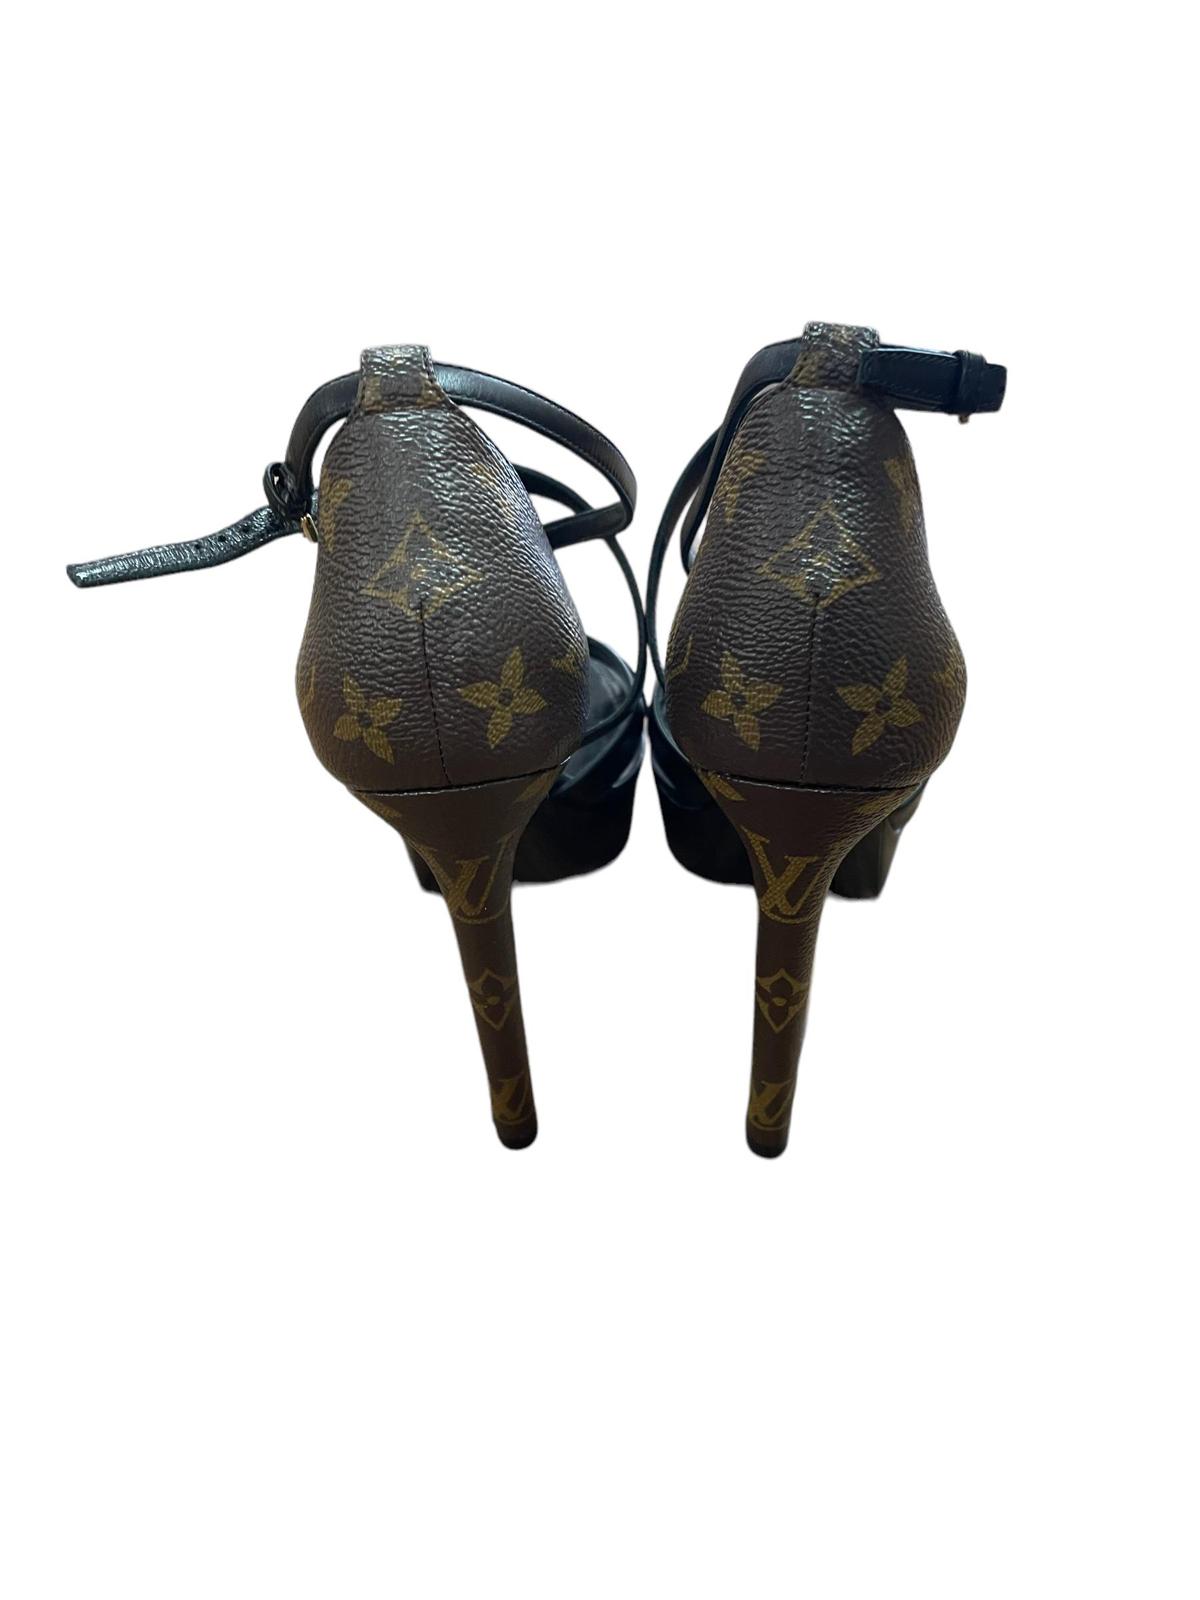 Brand New Louis Vuitton sandals size 37.5 RTP £1500